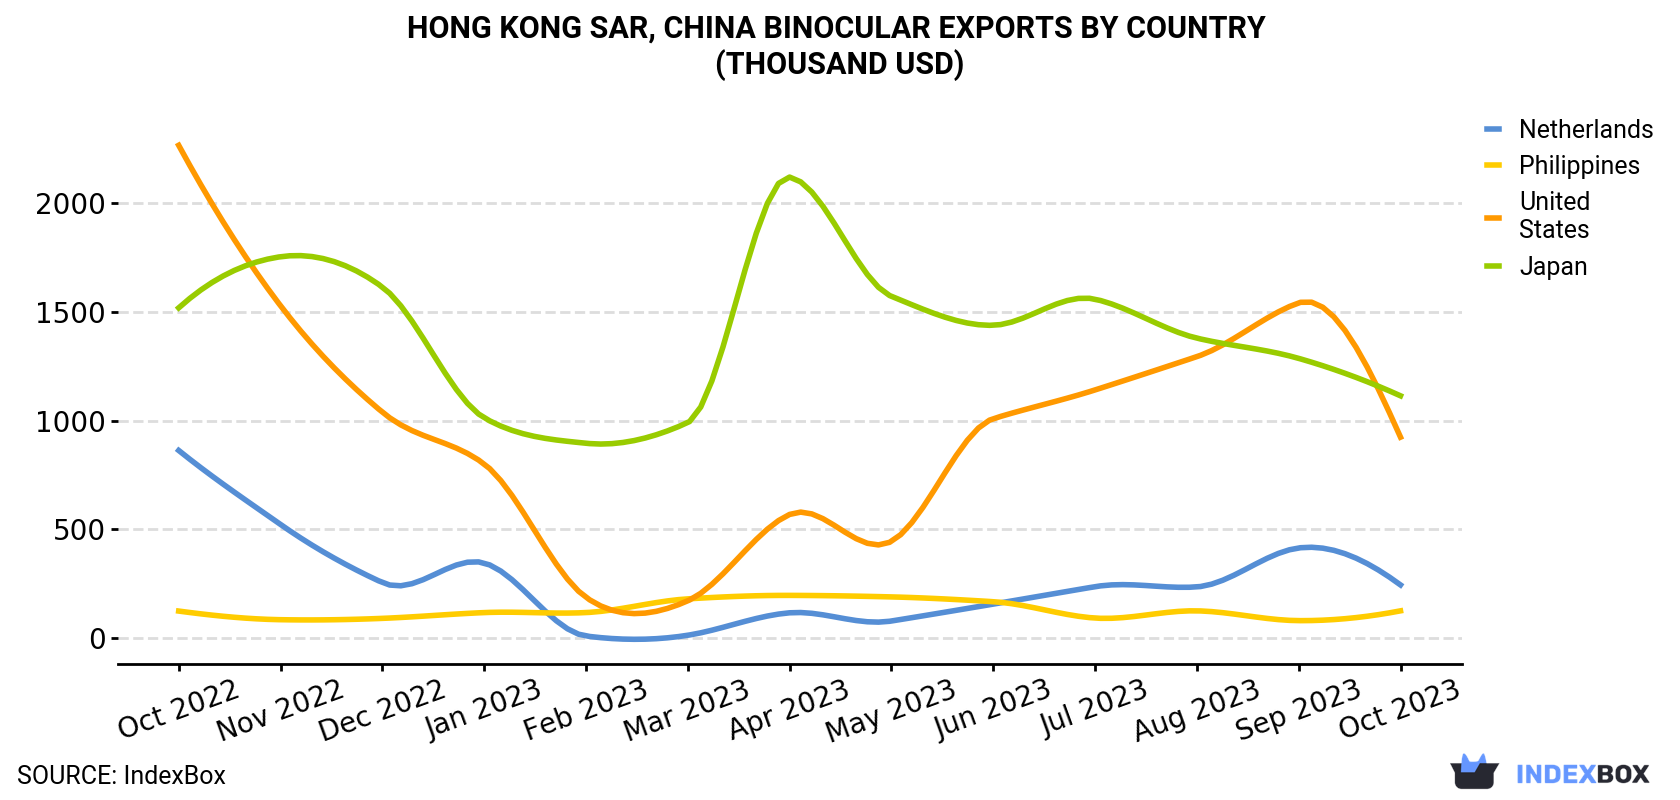 Hong Kong Binocular Exports By Country (Thousand USD)